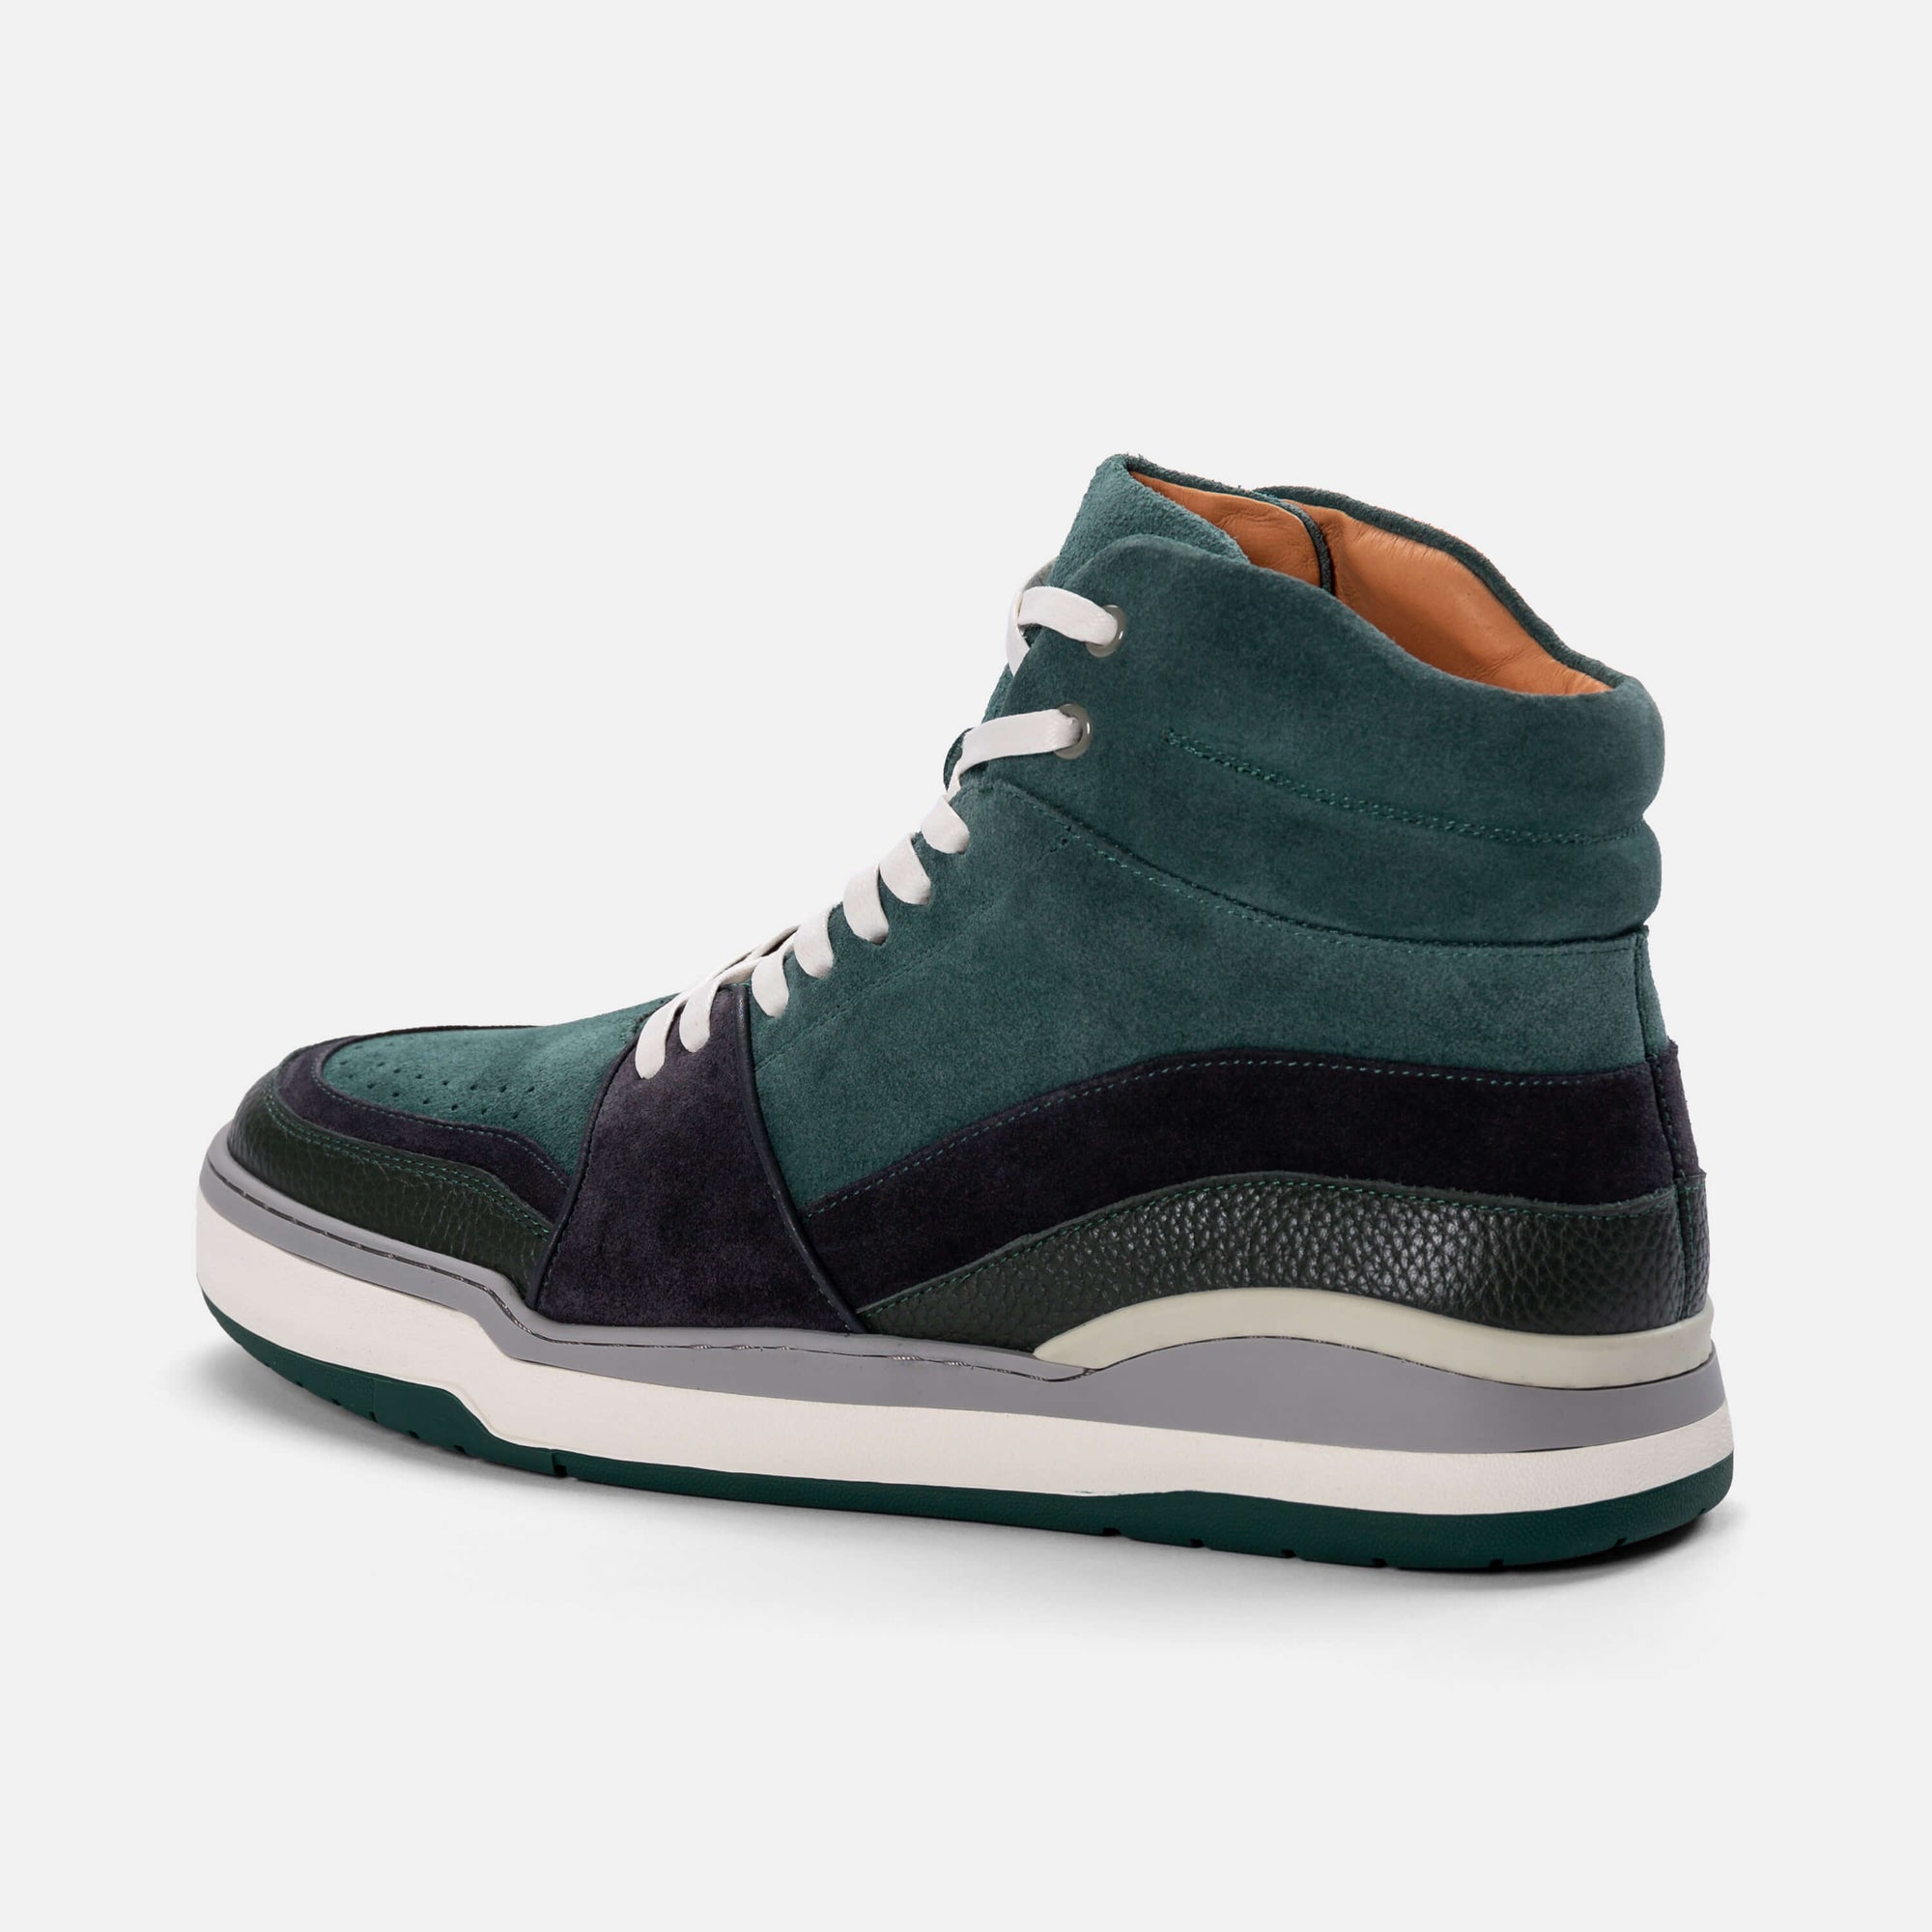 Poseidon Emerald Green Suede High Top Sneakers